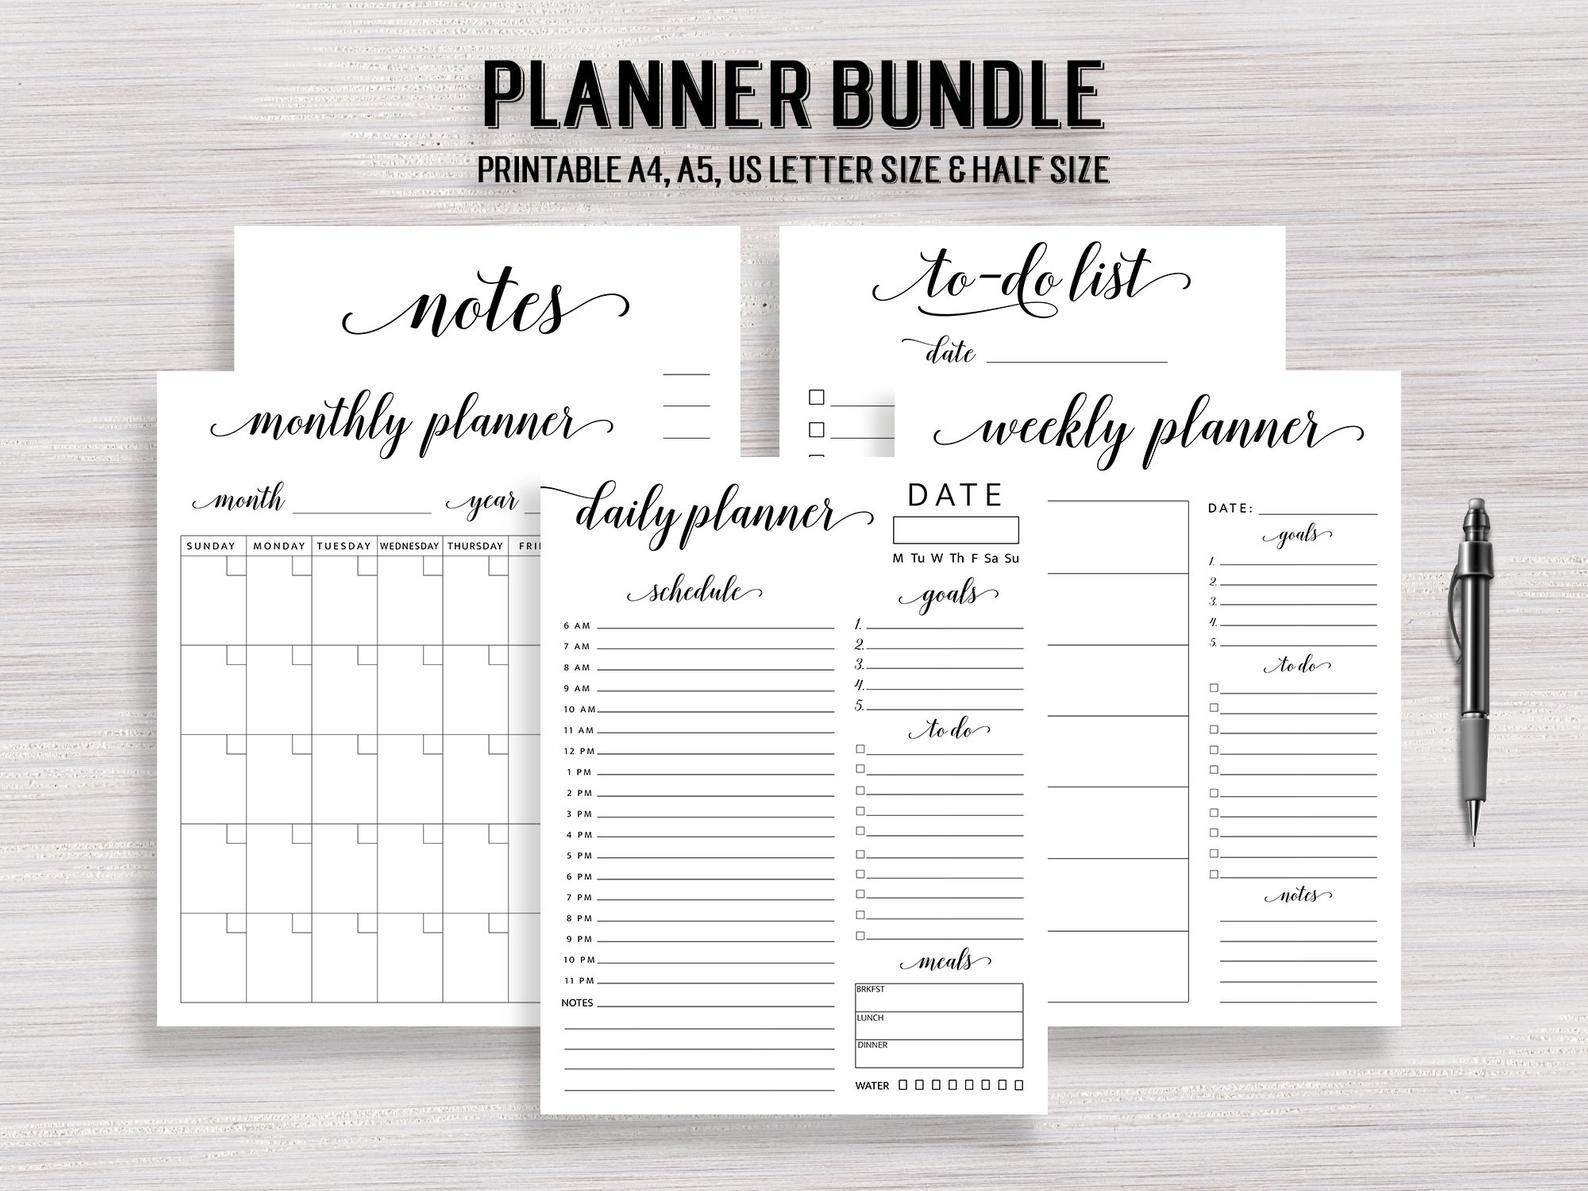 Planner Bundle Printable, Planner Pages Kit, Planner Inserts